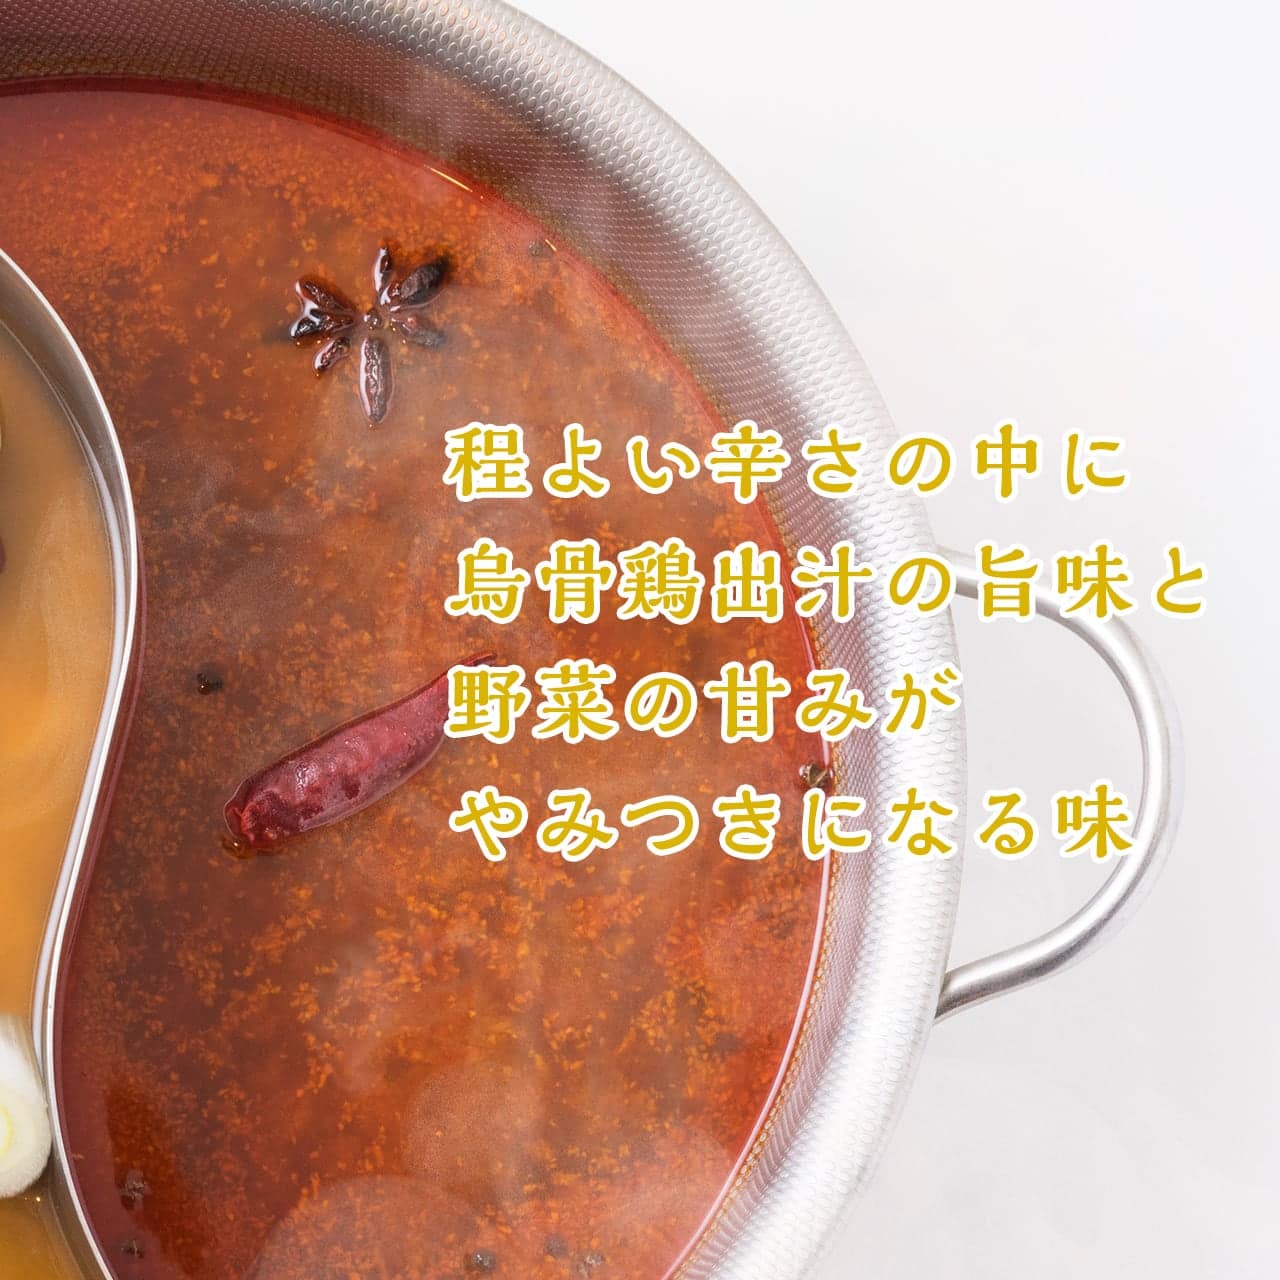 烏骨鶏赤辛スープ詳細